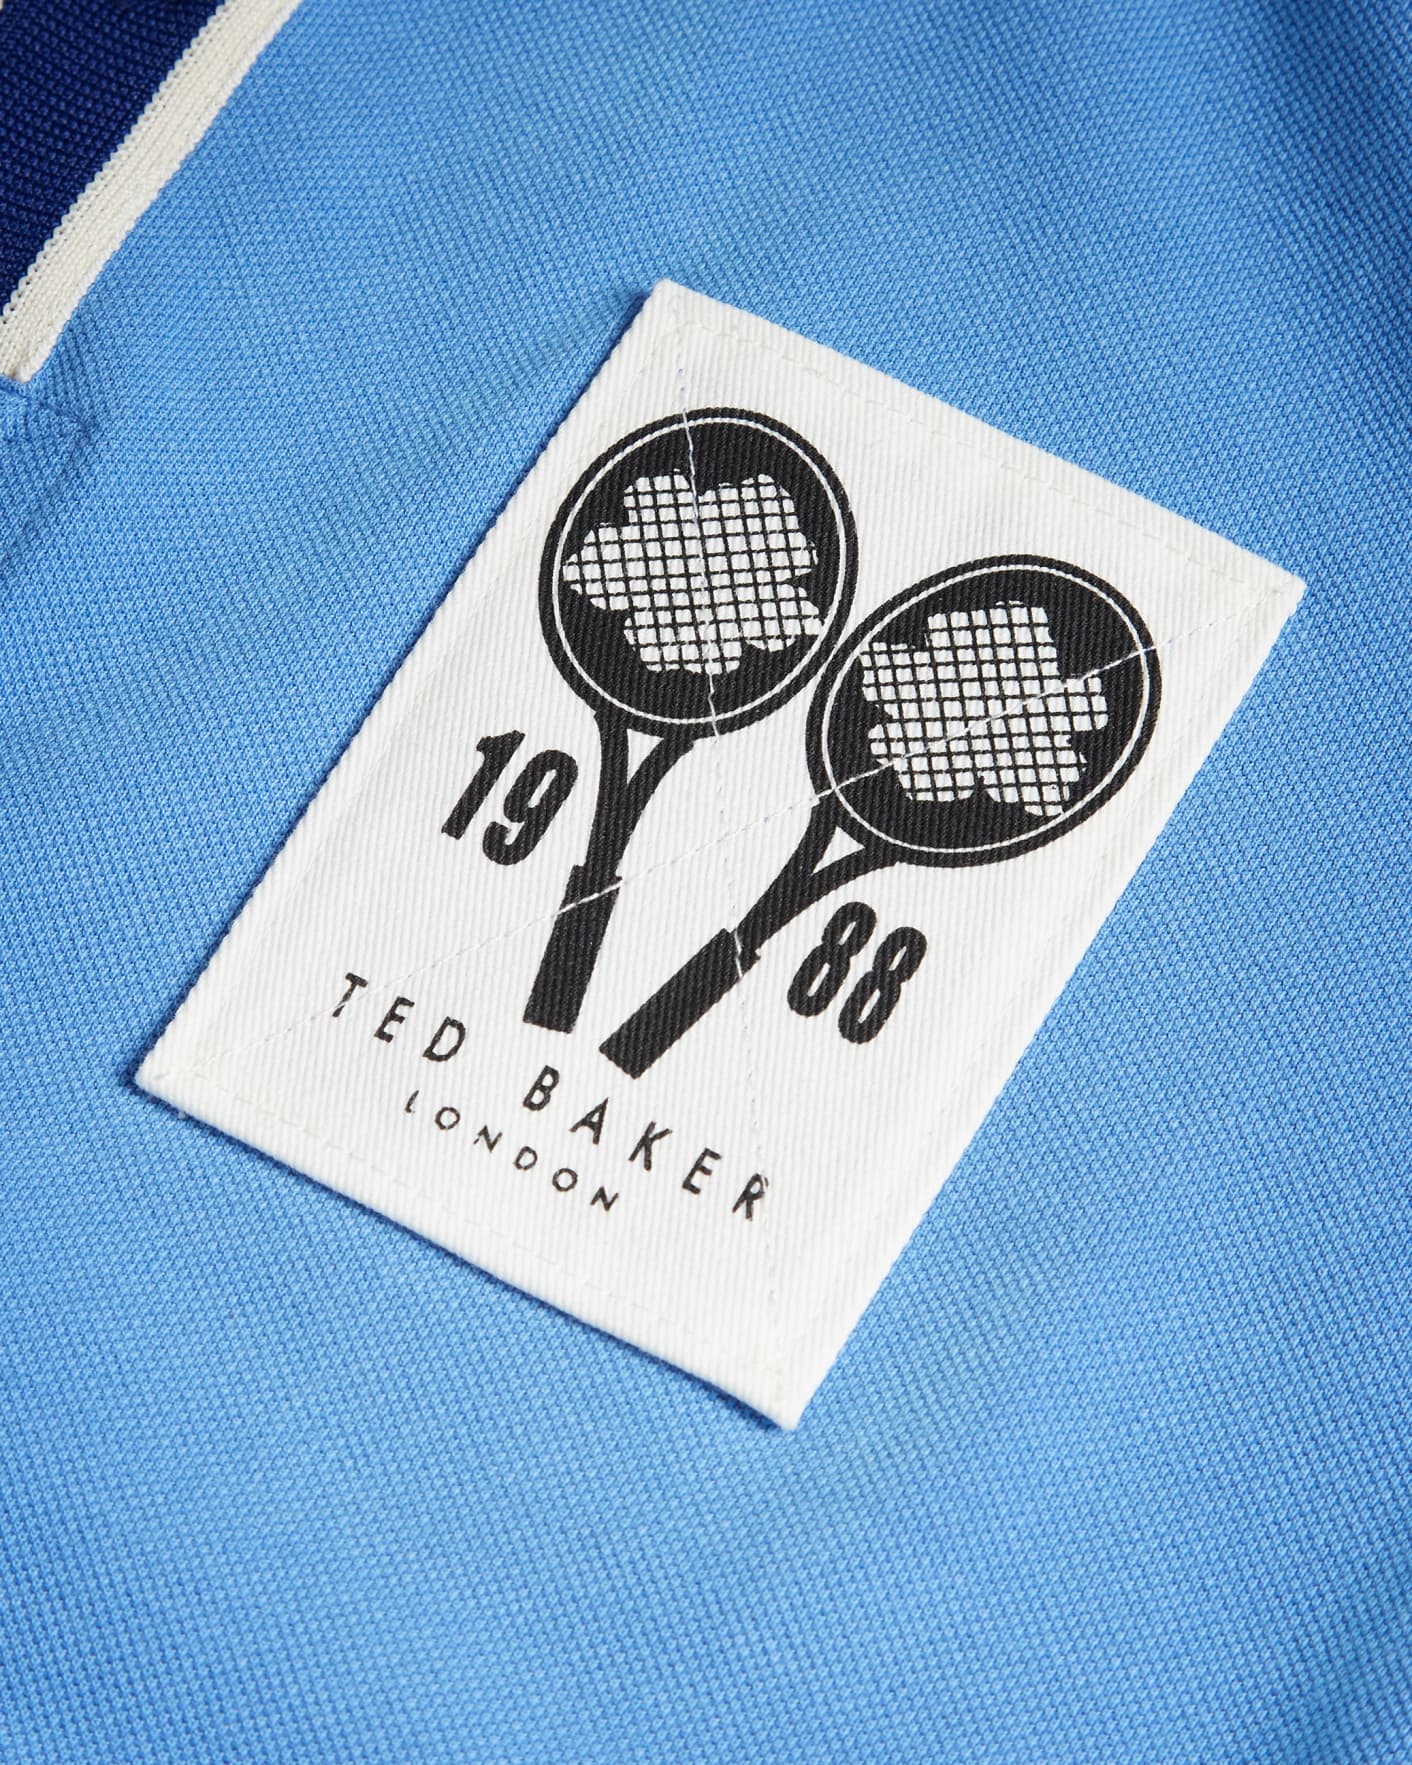 Blue Short Sleeve Pique Polo Shirt Ted Baker